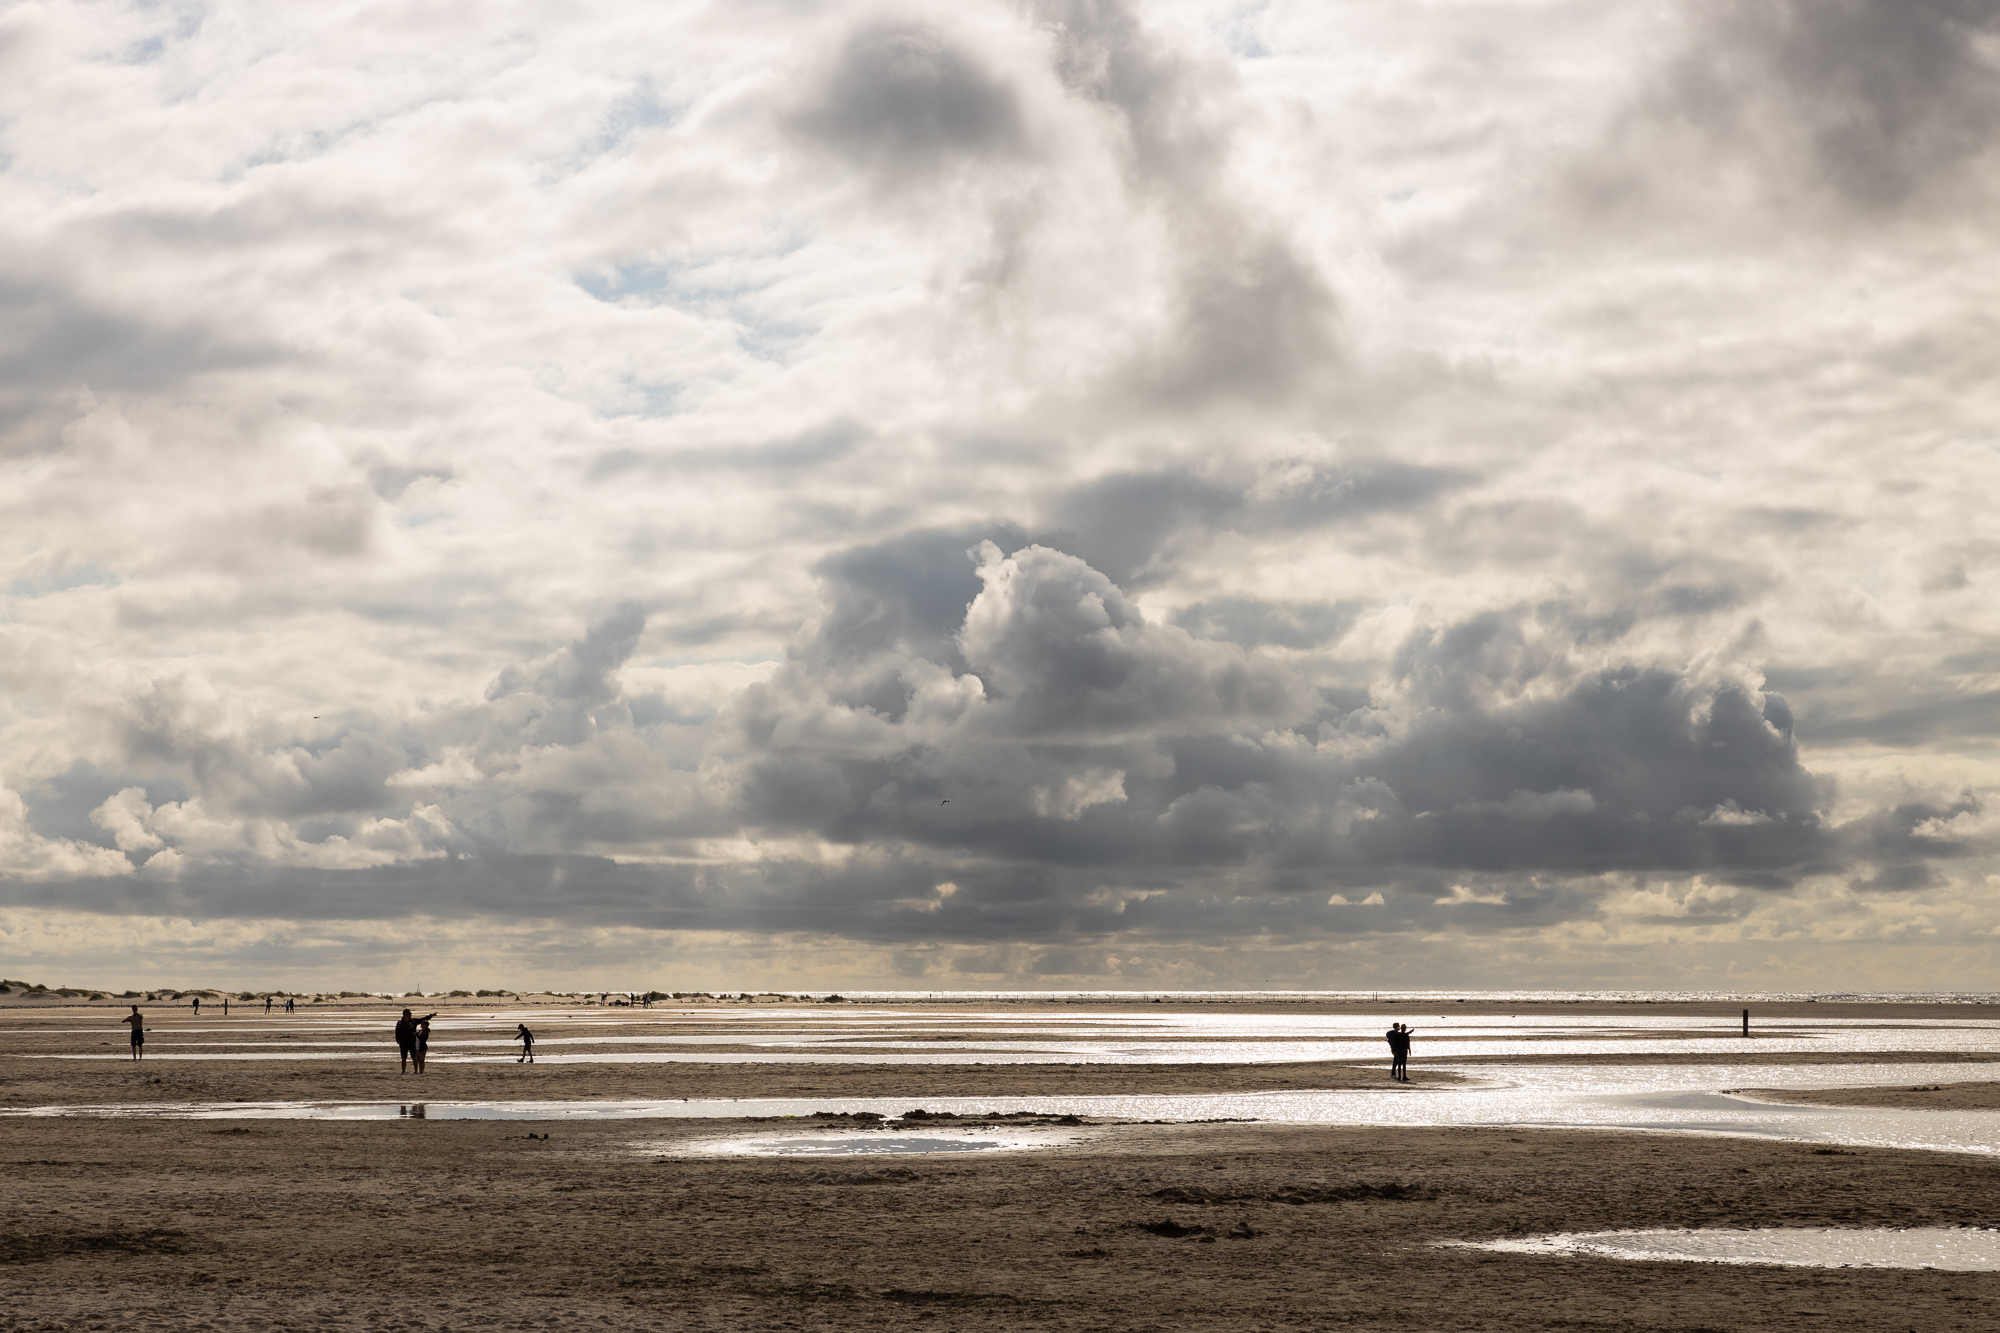 The endless beaches of Texel...